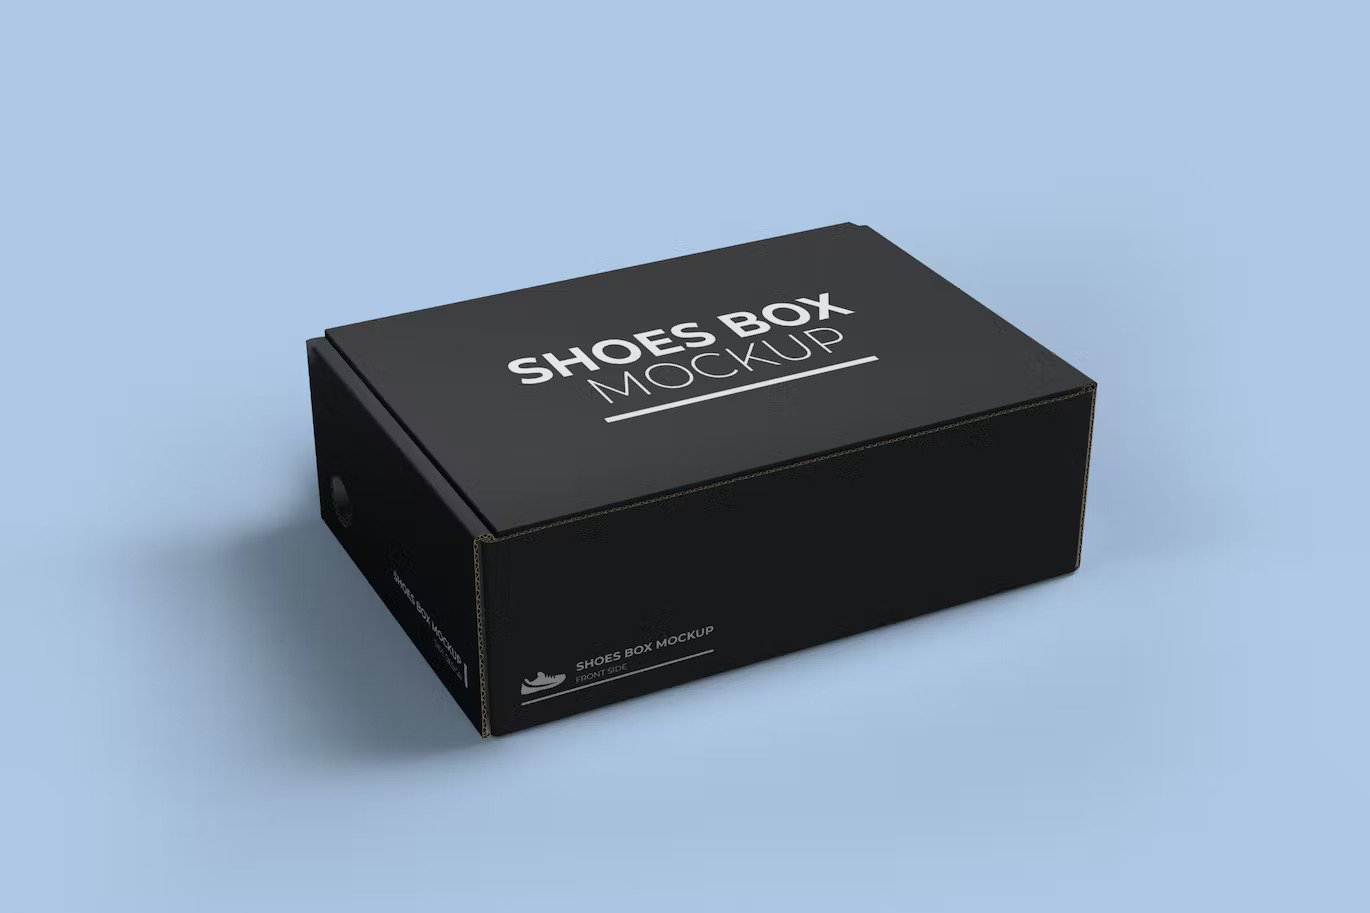 A black shoe box mockup